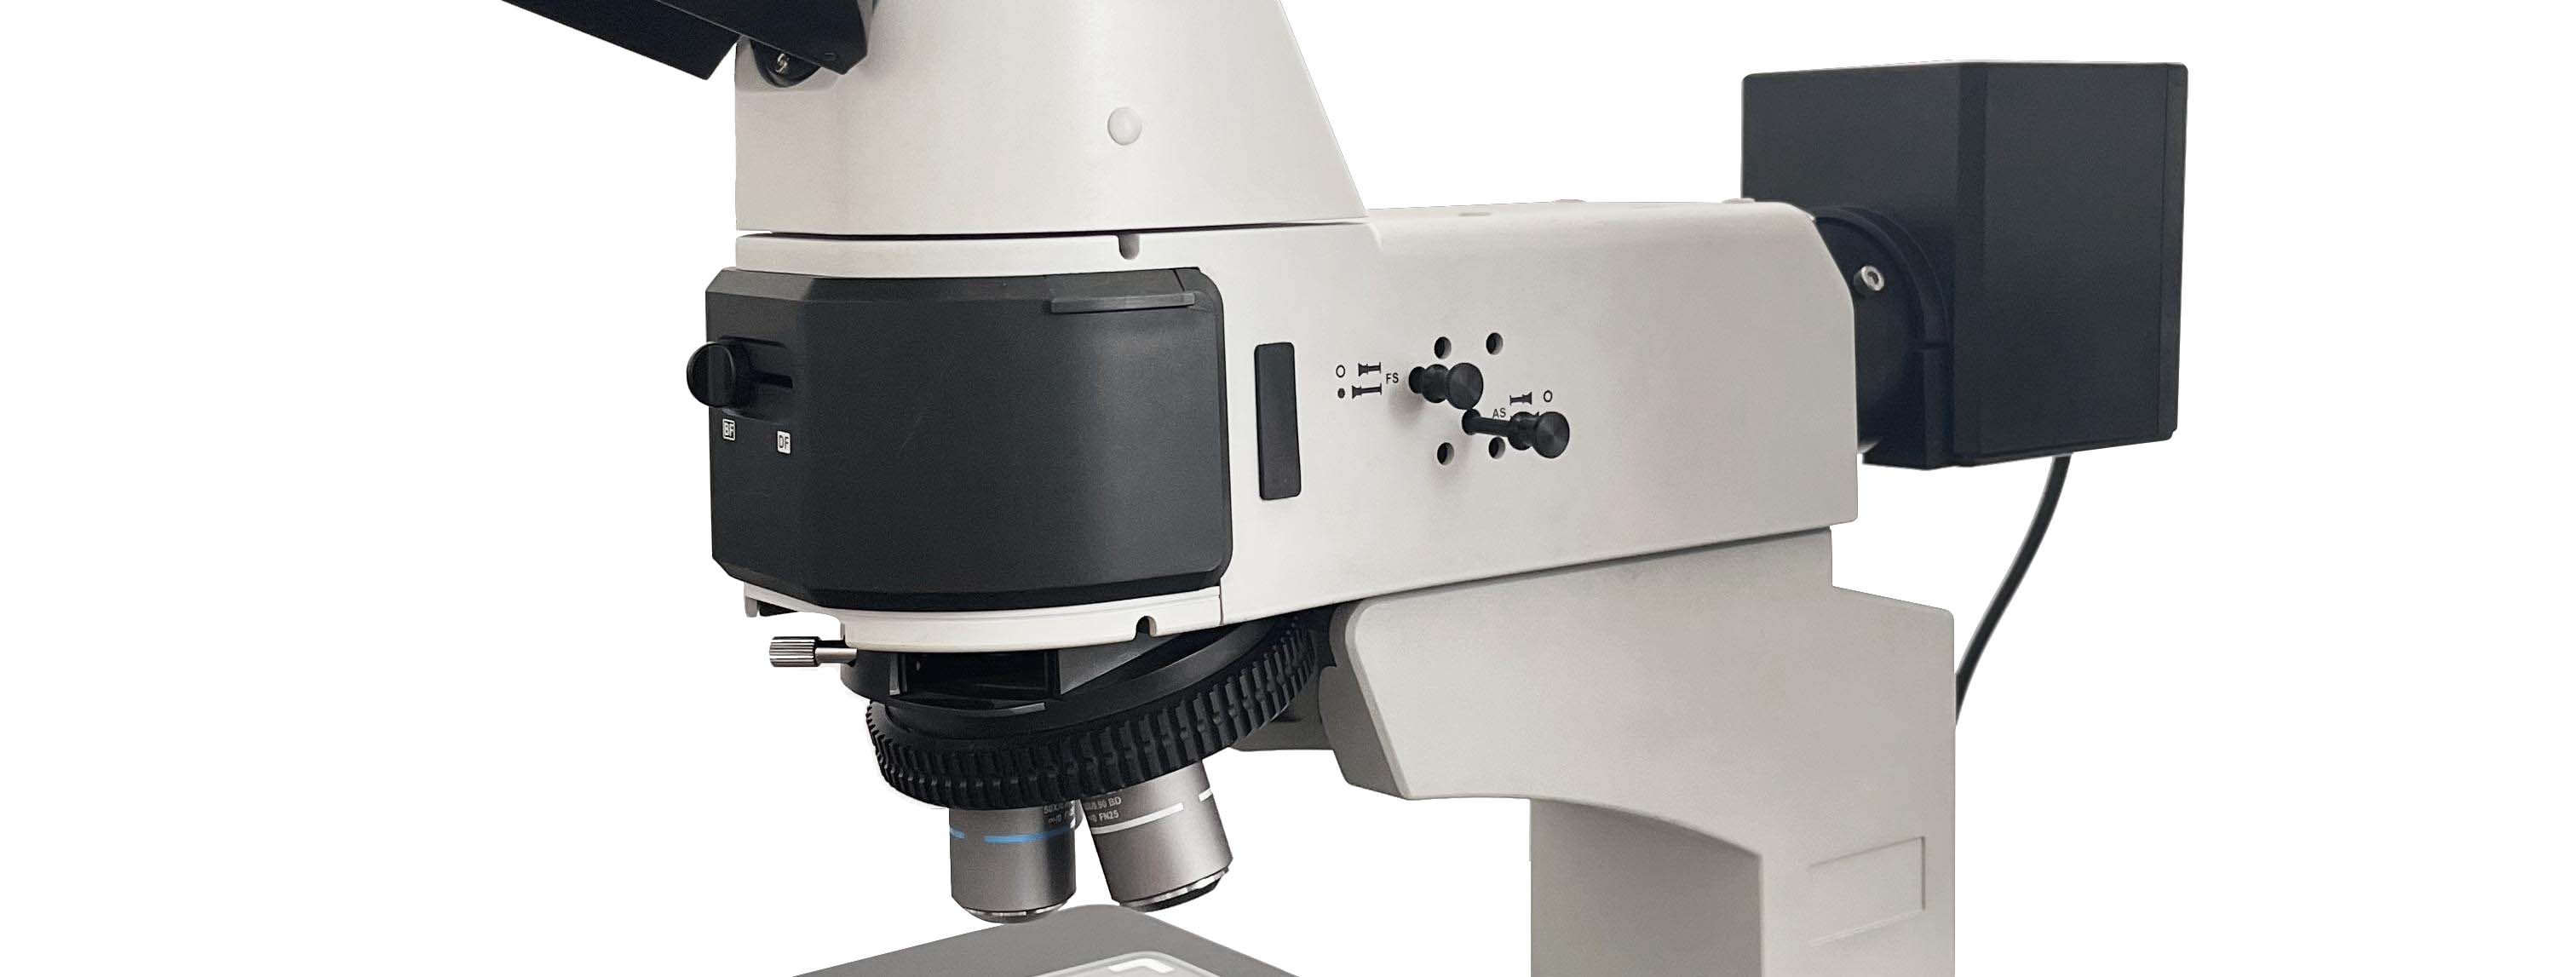 digital metallographic microscope